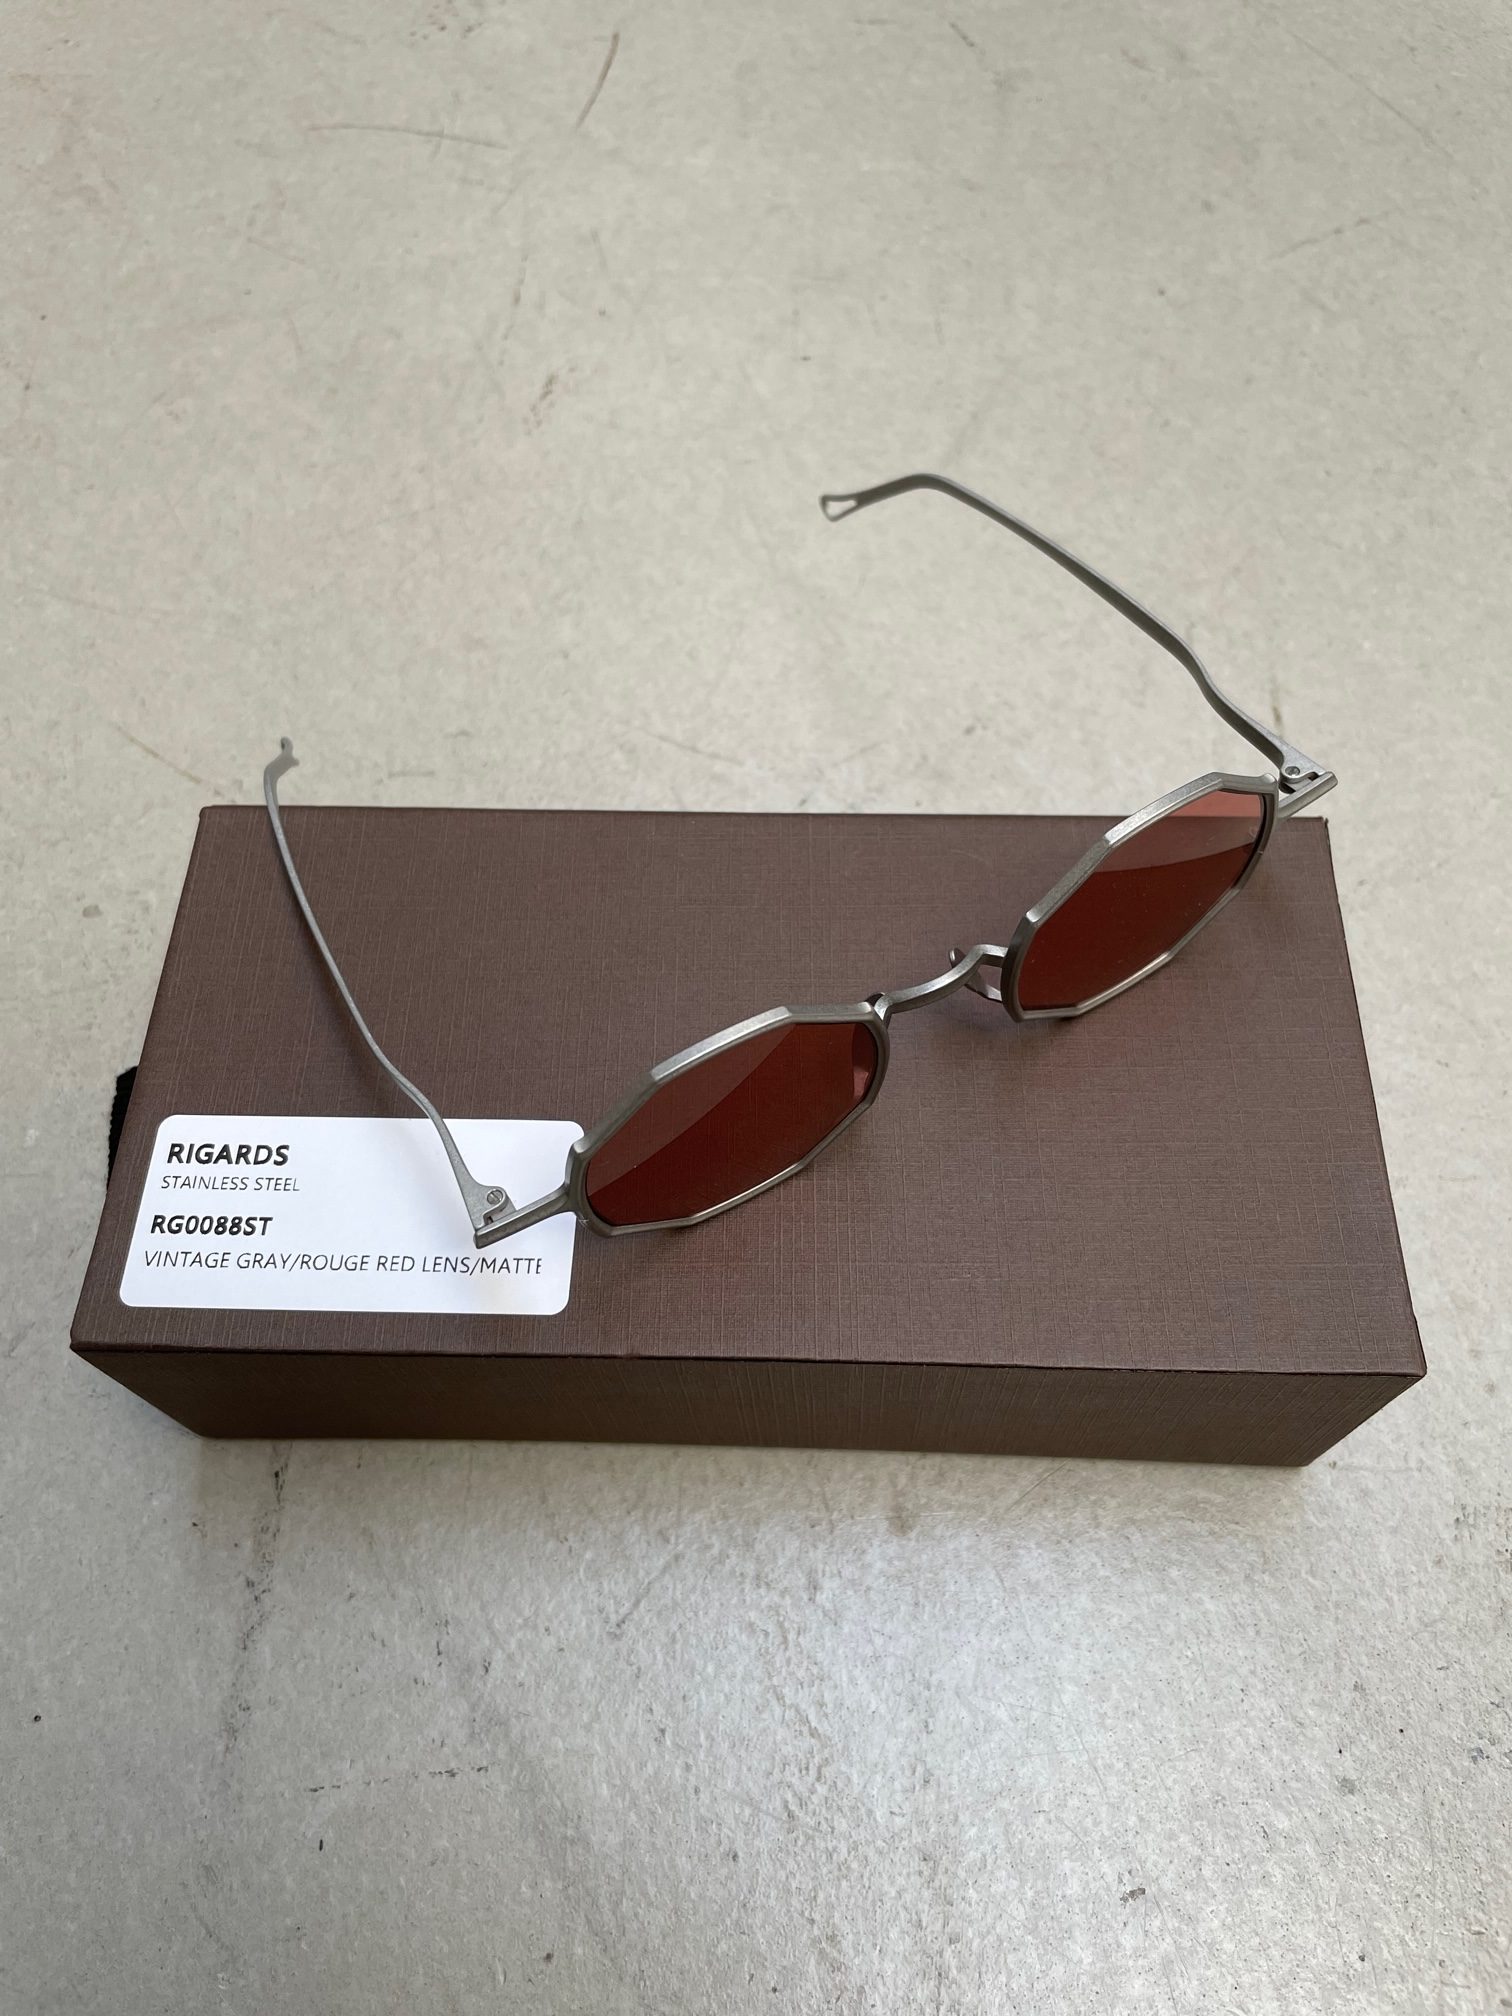 hide-m | RIGARDS sunglasses grey, RG0088ST lens rouge vintage